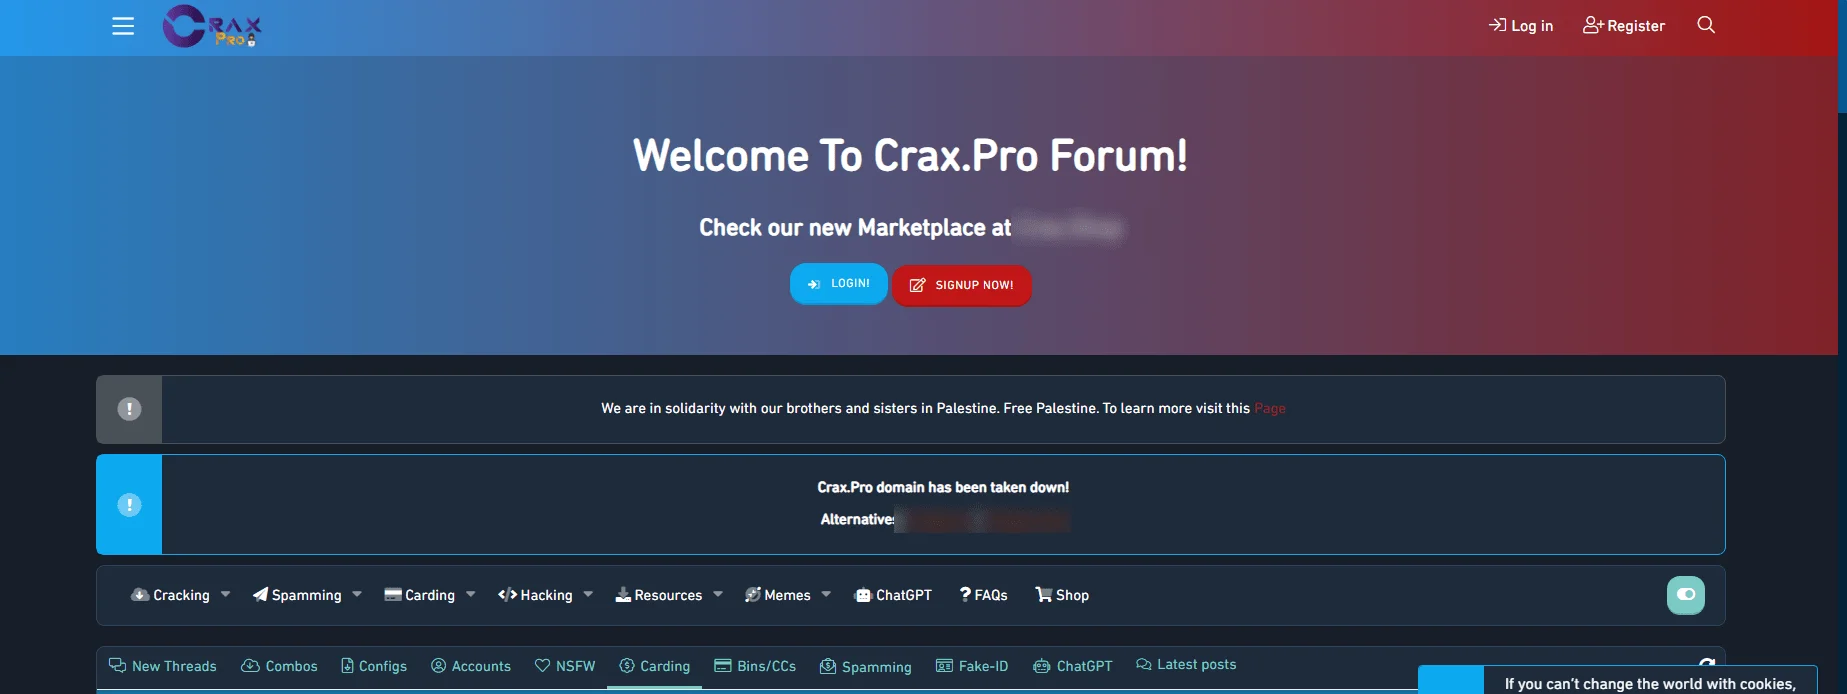 Main screen of CraxPro